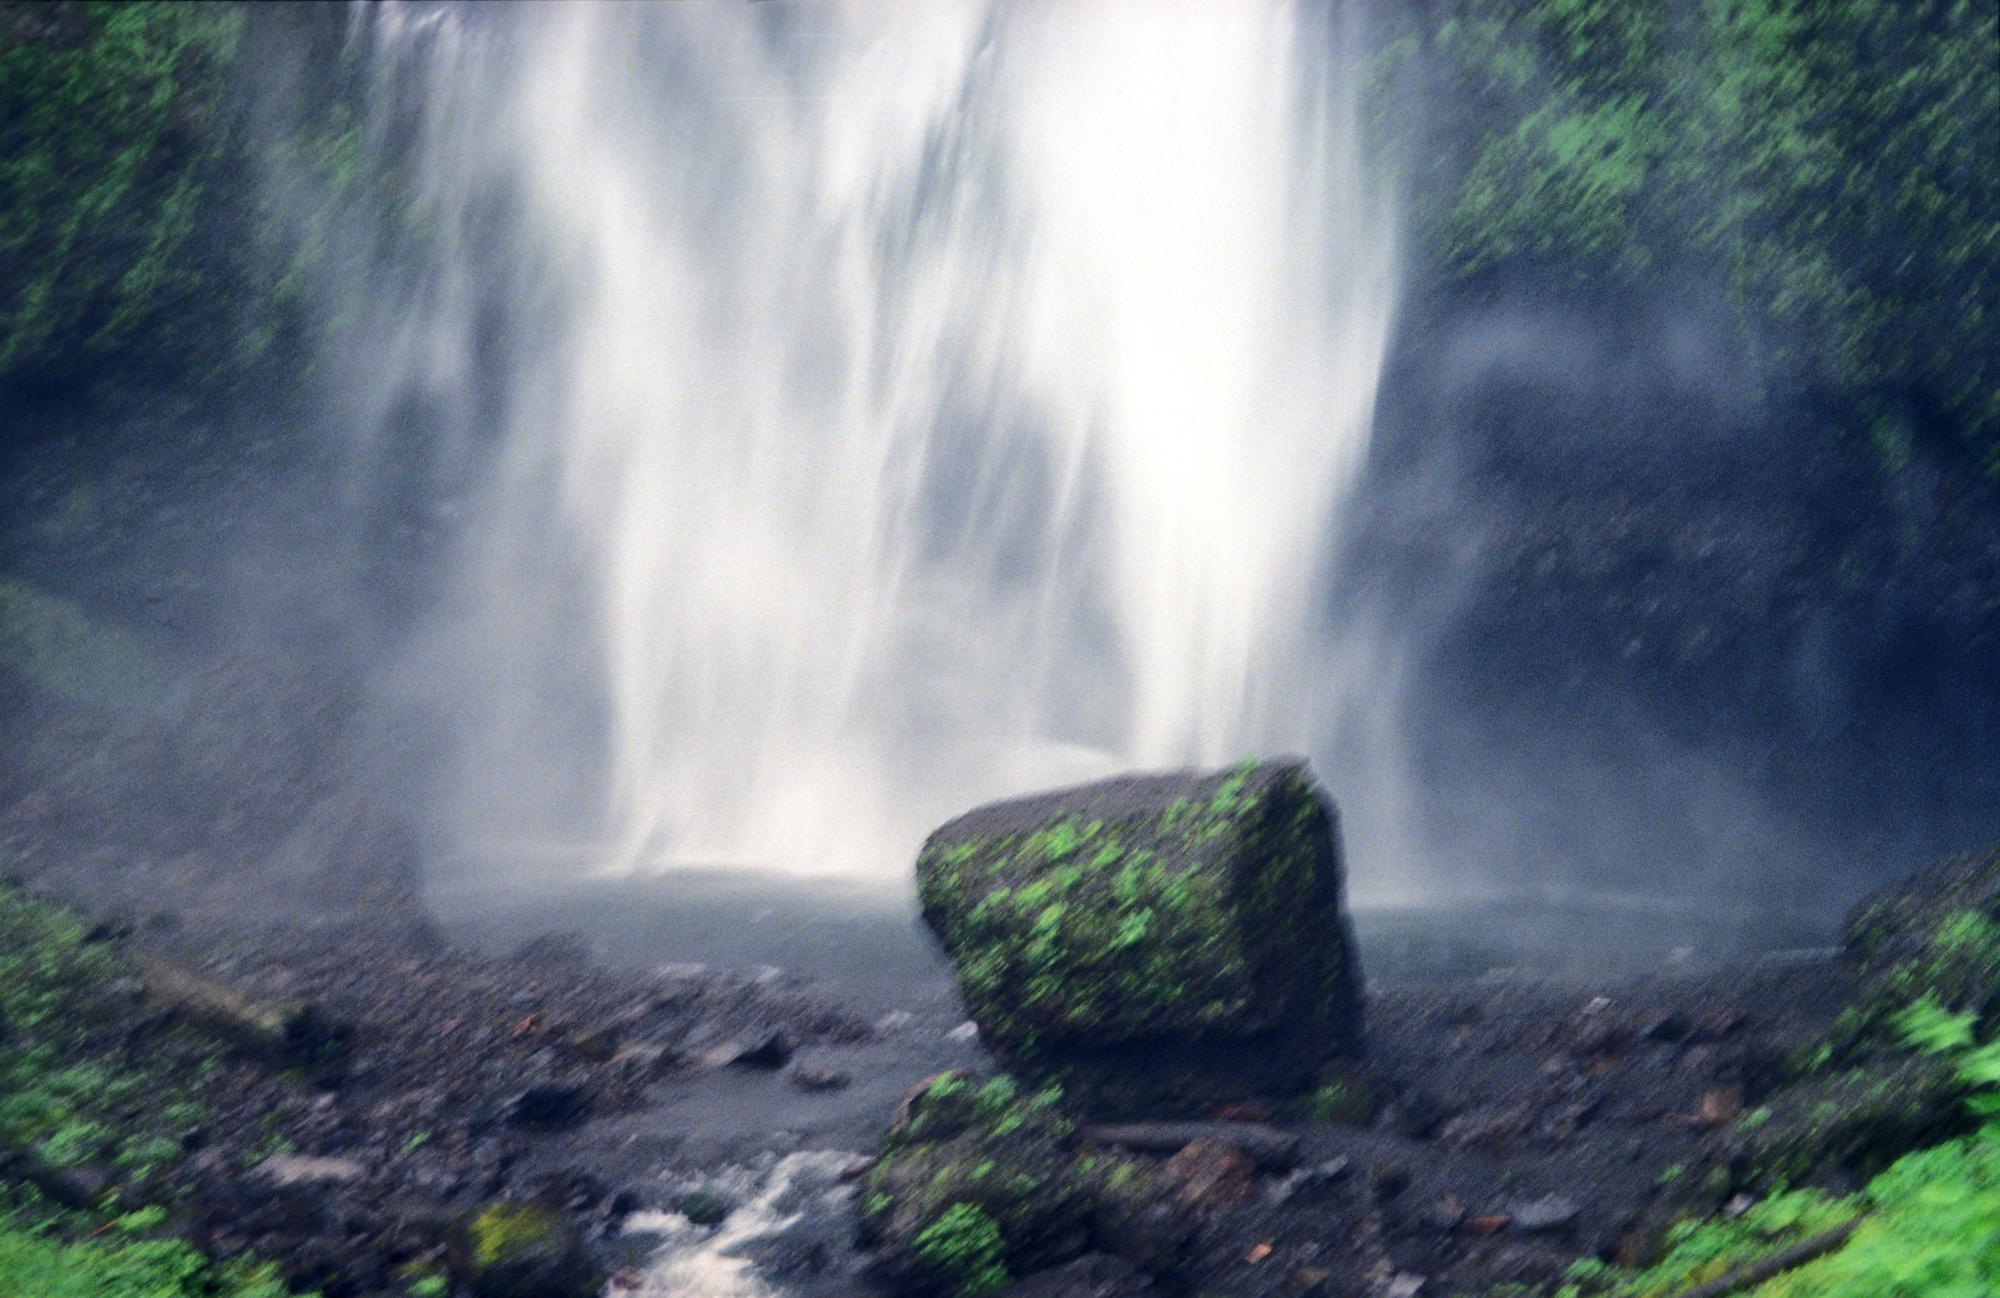 Eastern Washington - Waterfall #3